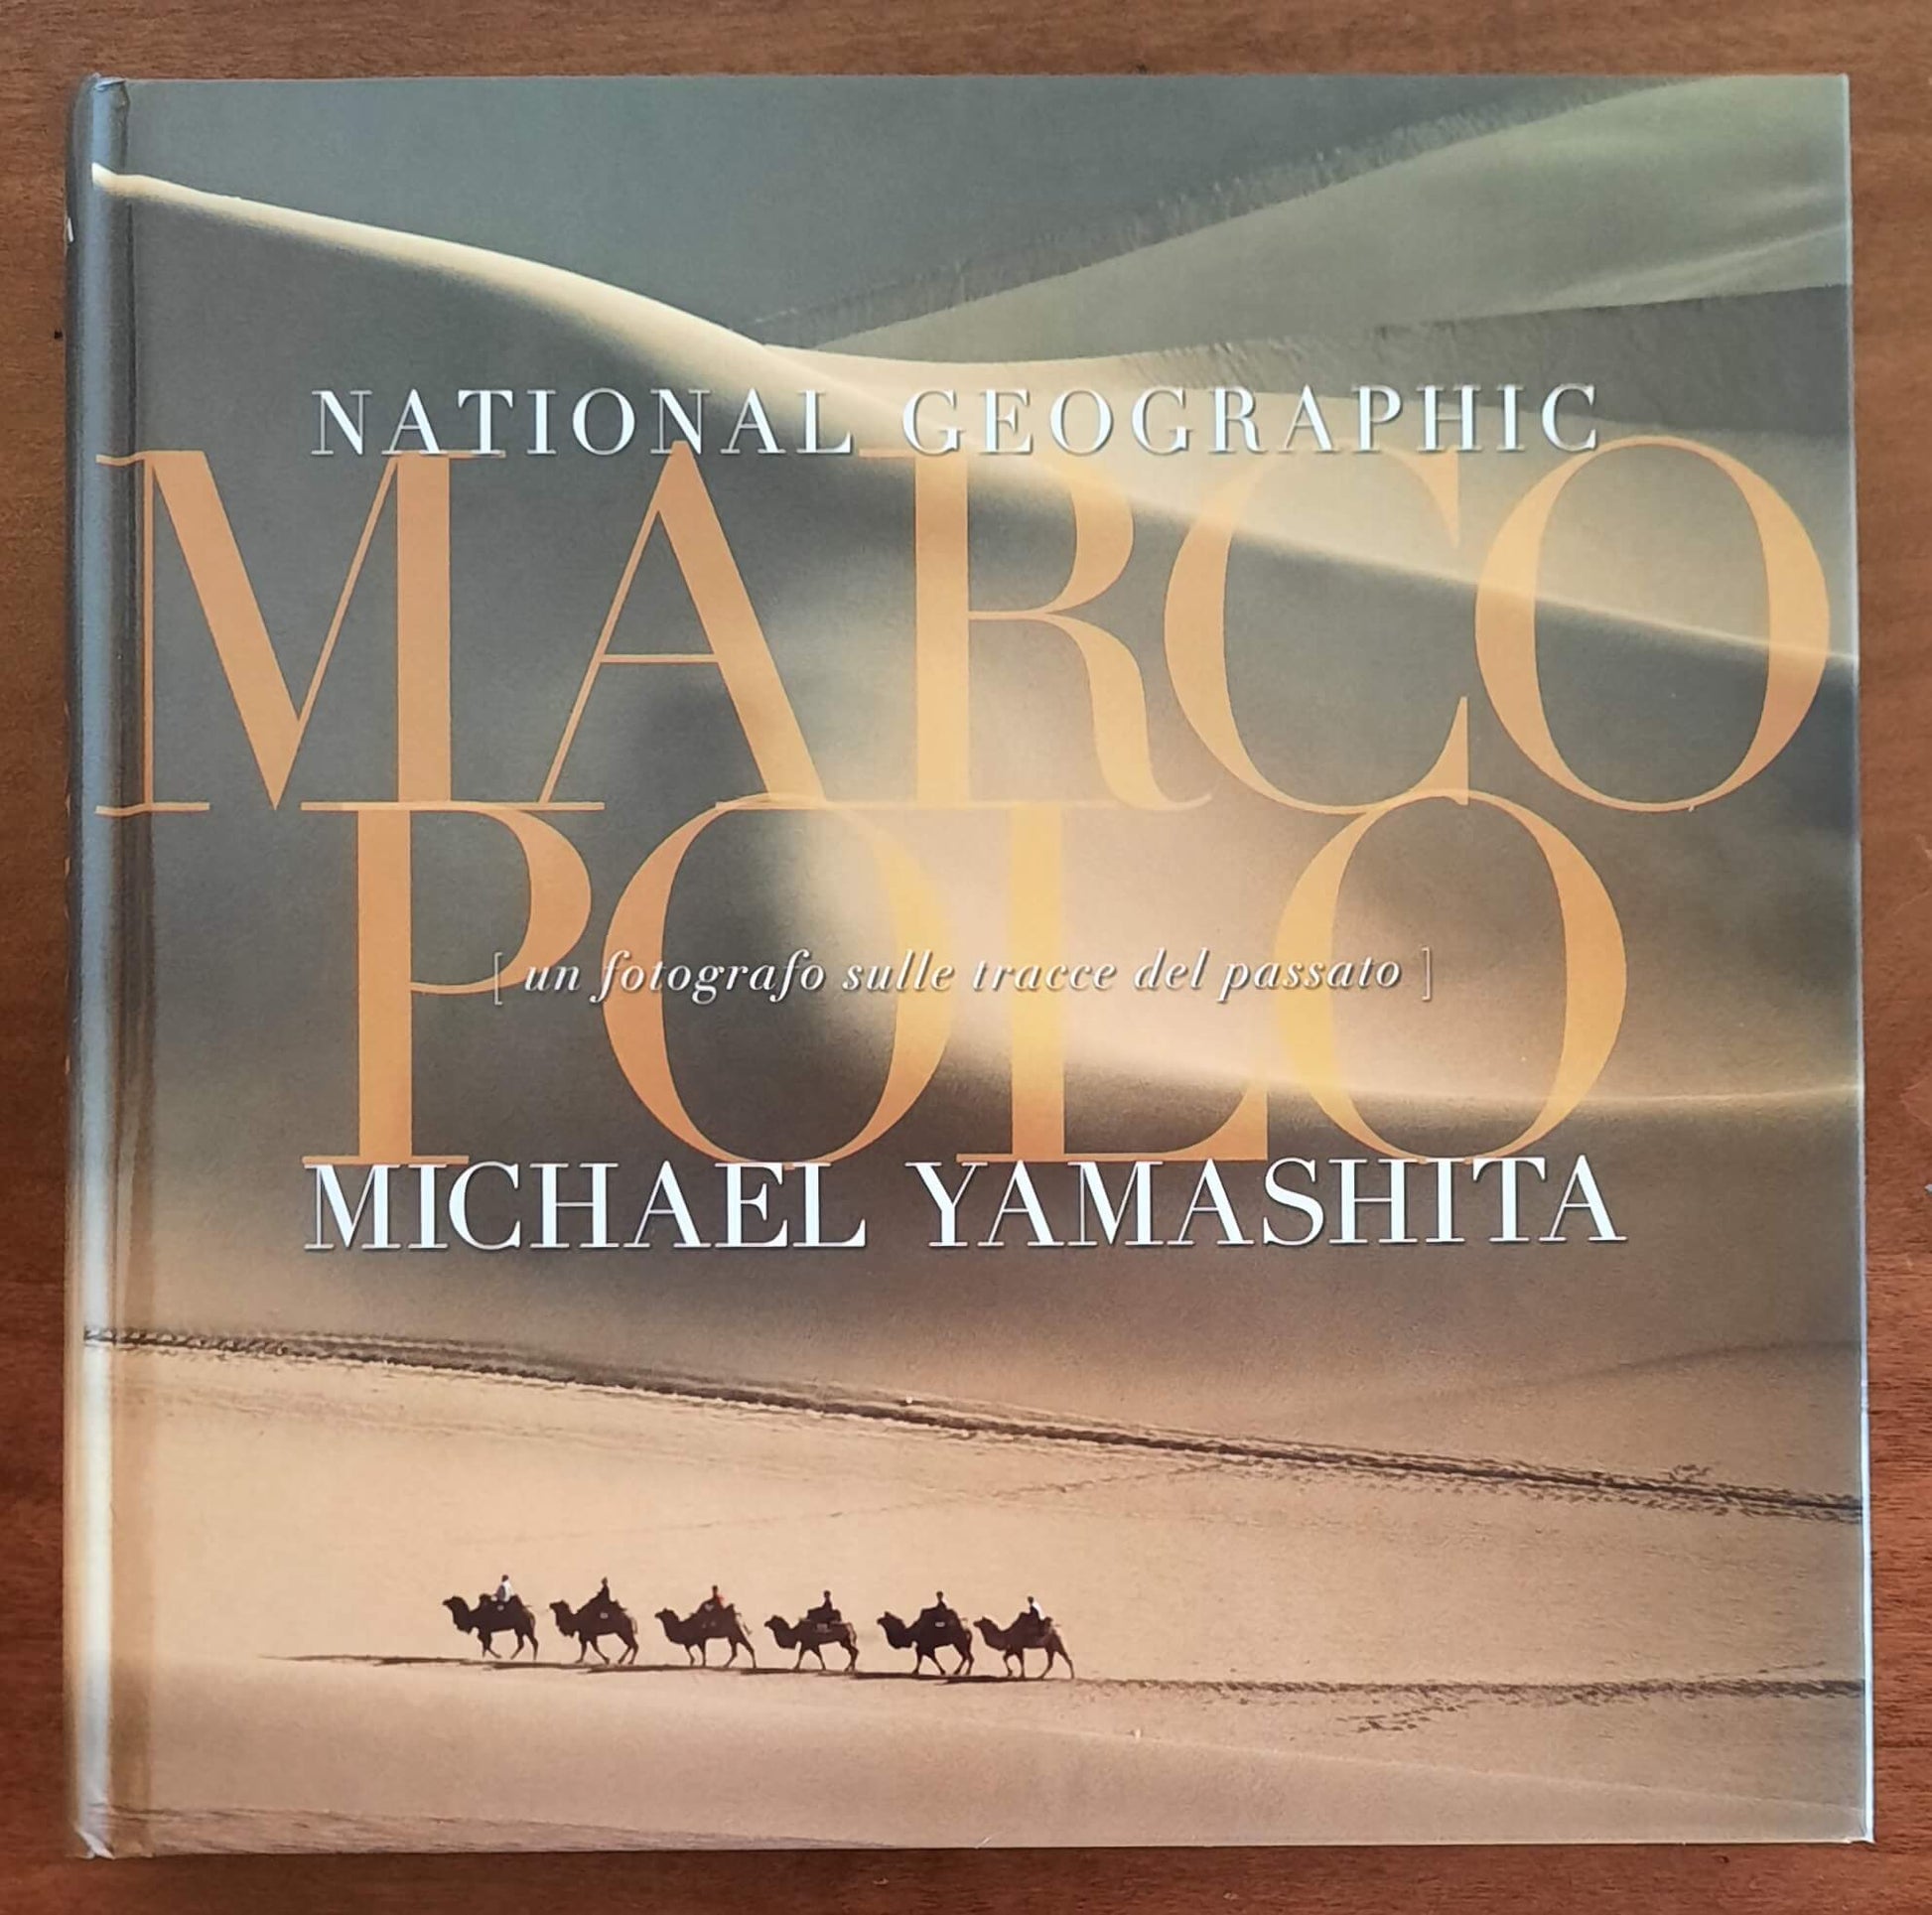 Marco Polo di Michael Yamashita - Edizioni White Star - National Geographic